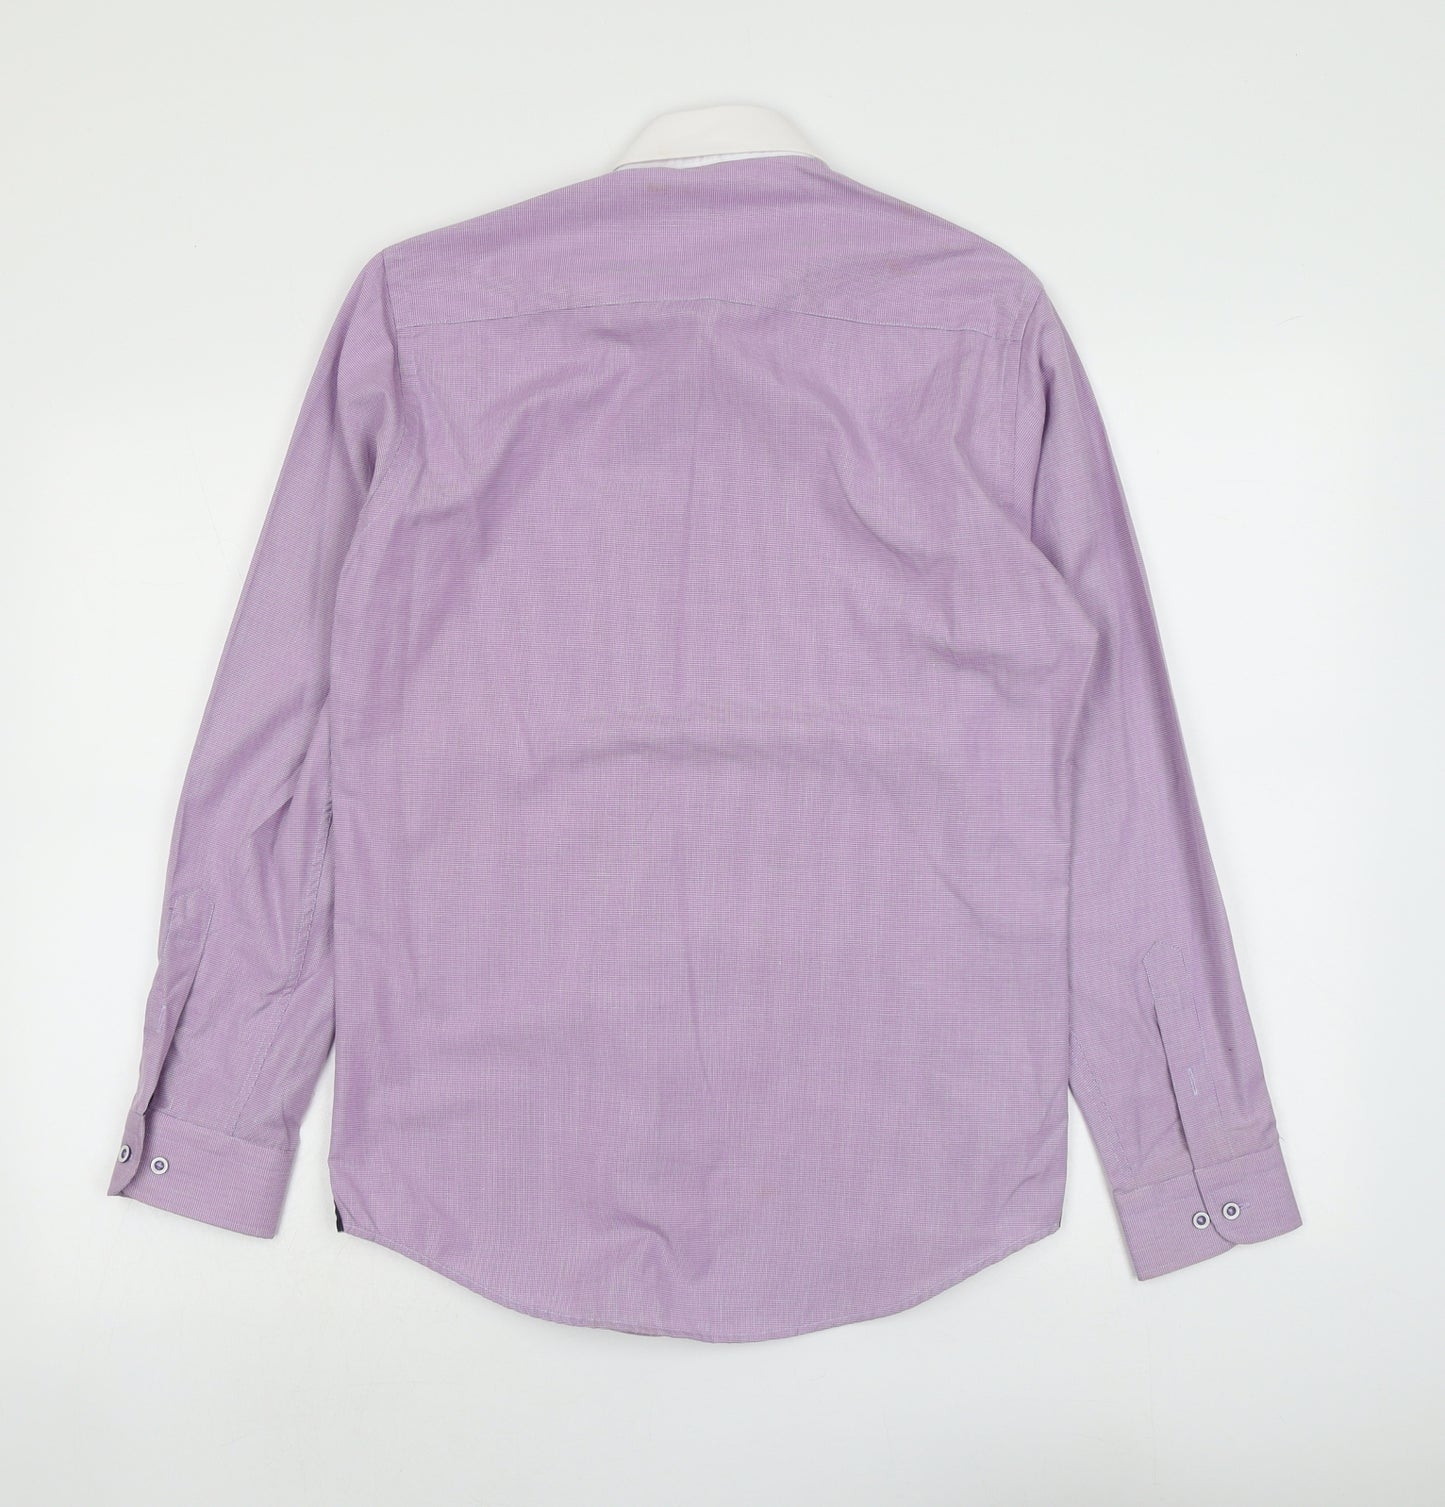 Benetti Mens Purple Cotton Button-Up Size 15 Collared Button